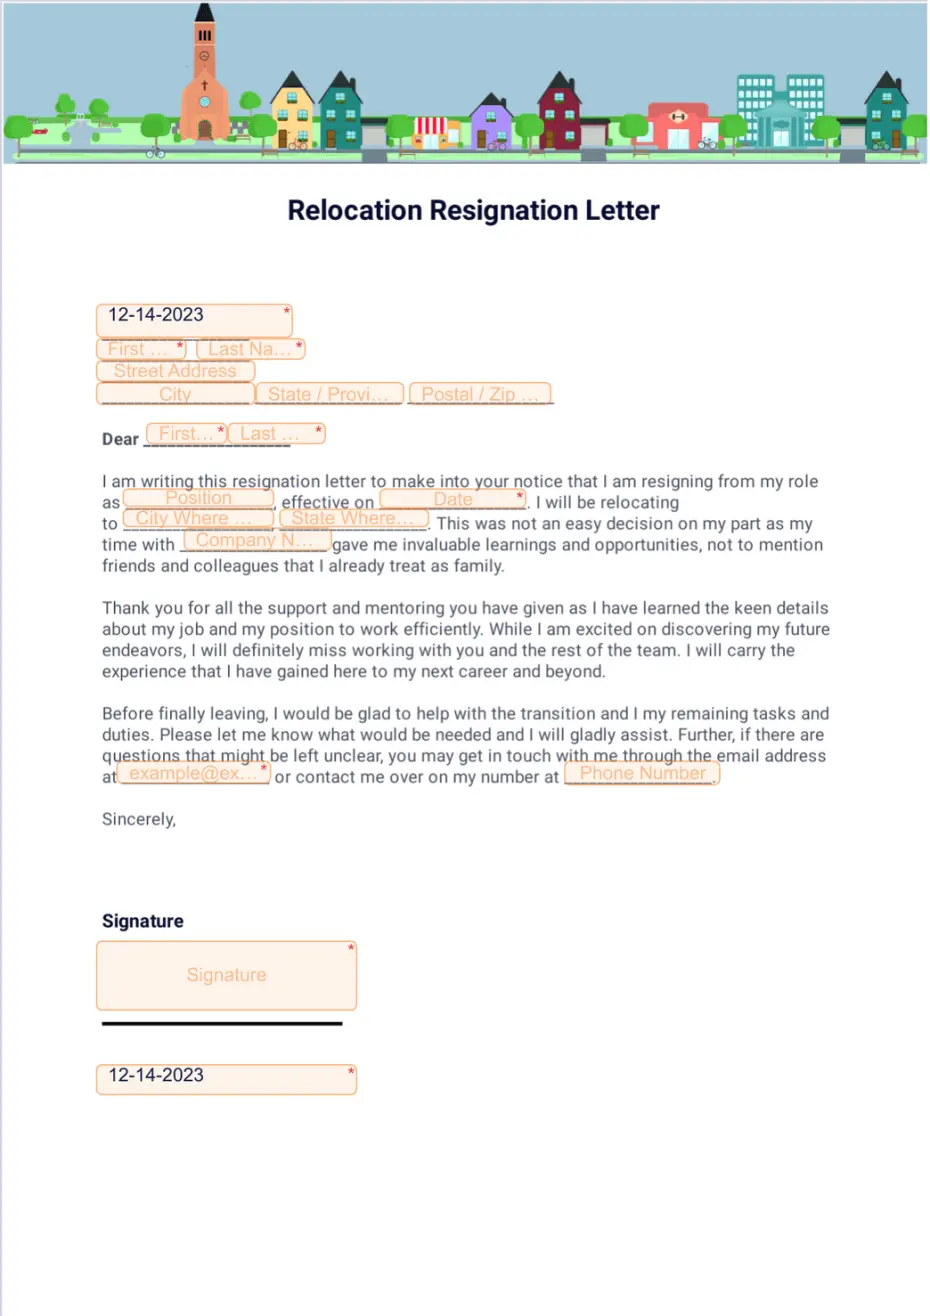 Relocation Resignation Letter